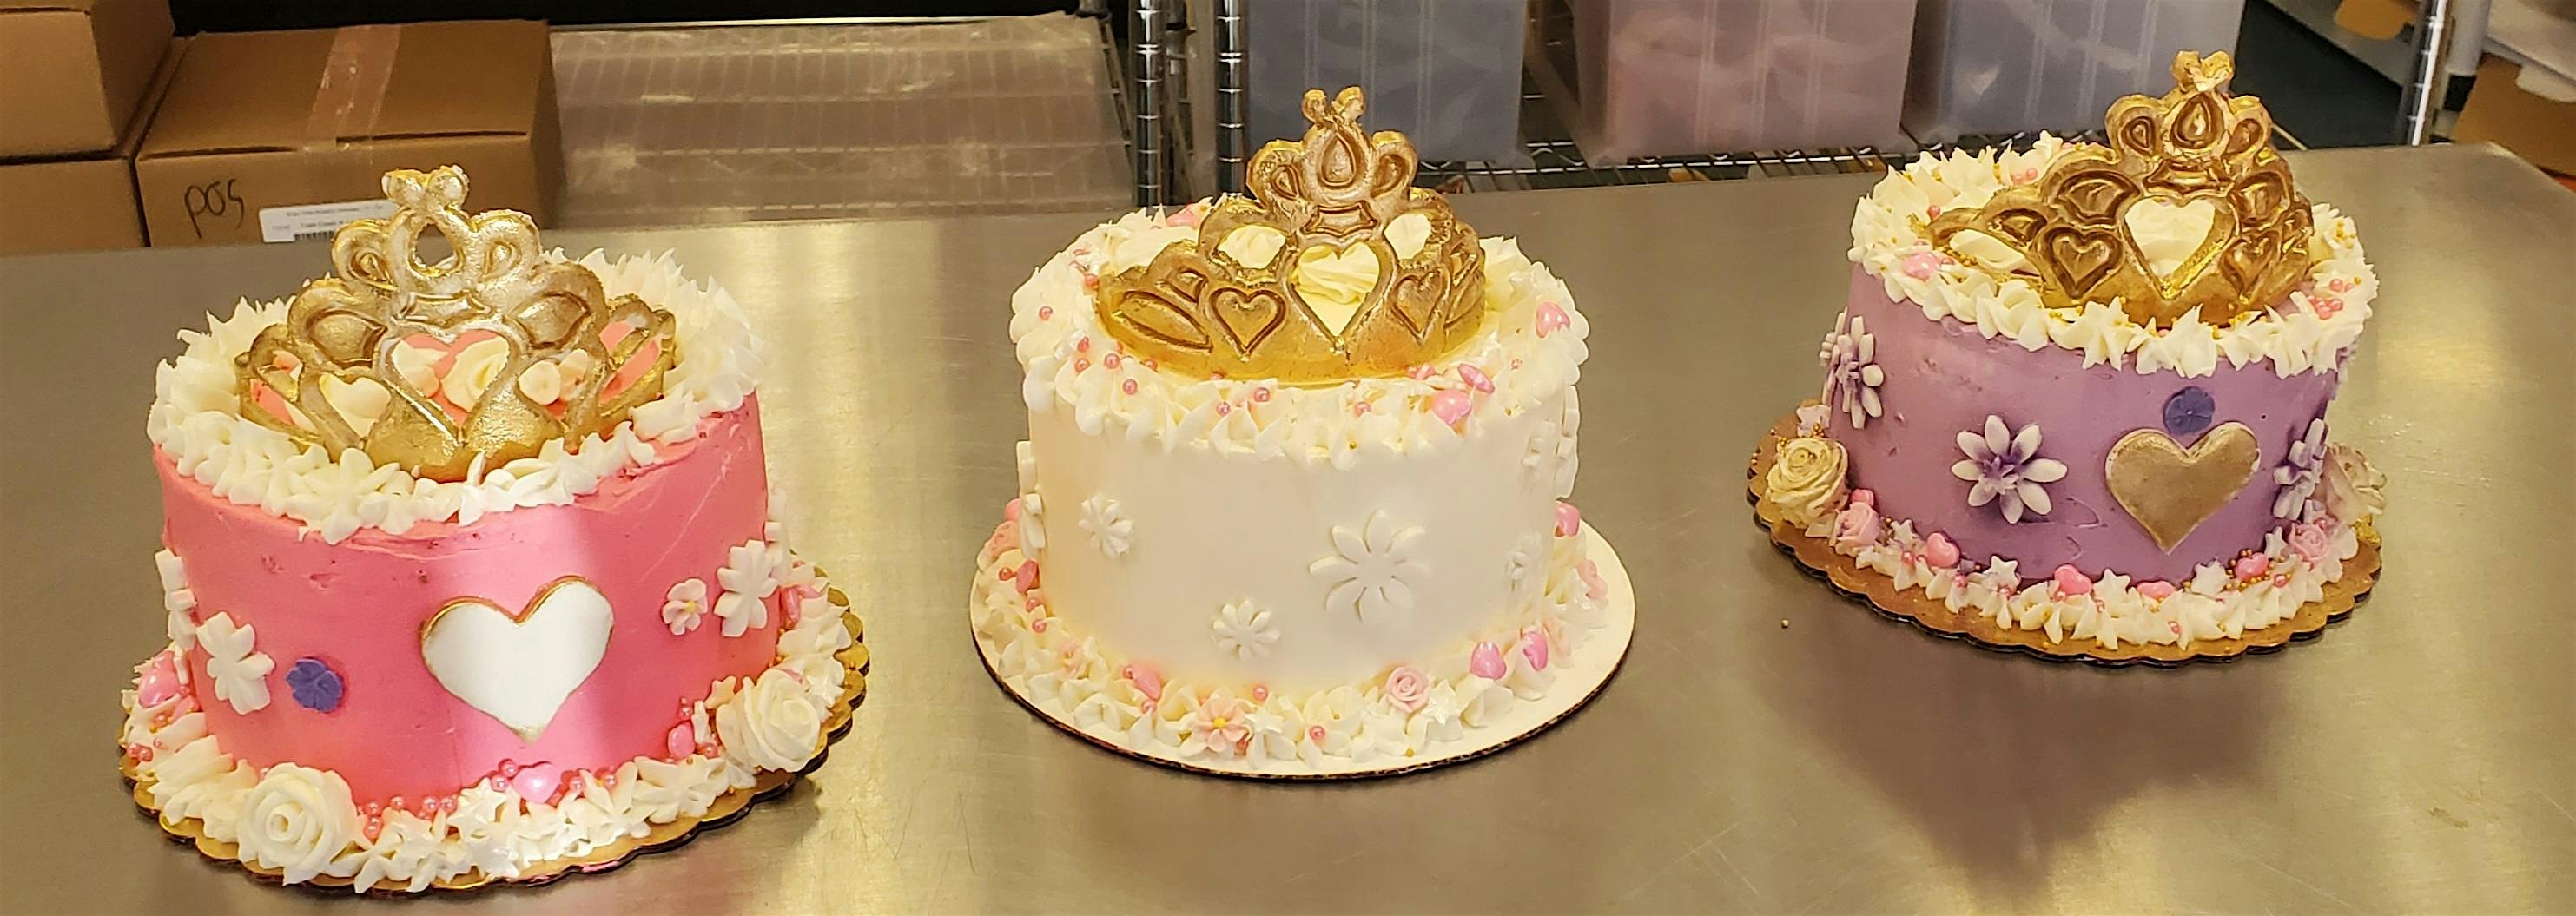 Parent & Me Class: Cake Decorating with Buttercream: Princess Themed Cake